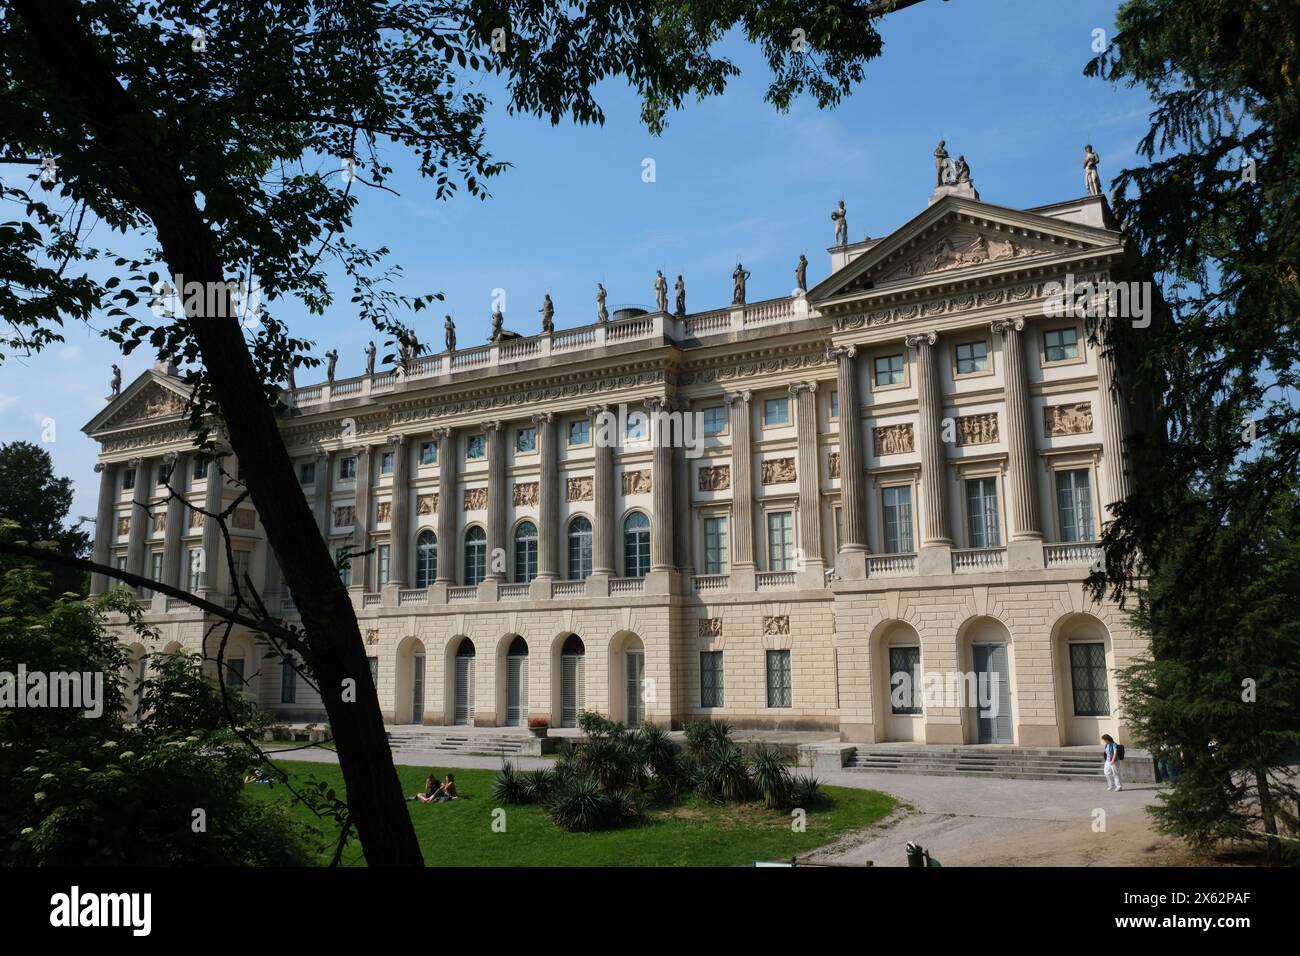 La Villa Reale demeure de la Galleria d'Arte Moderna, Milan, Italie Banque D'Images